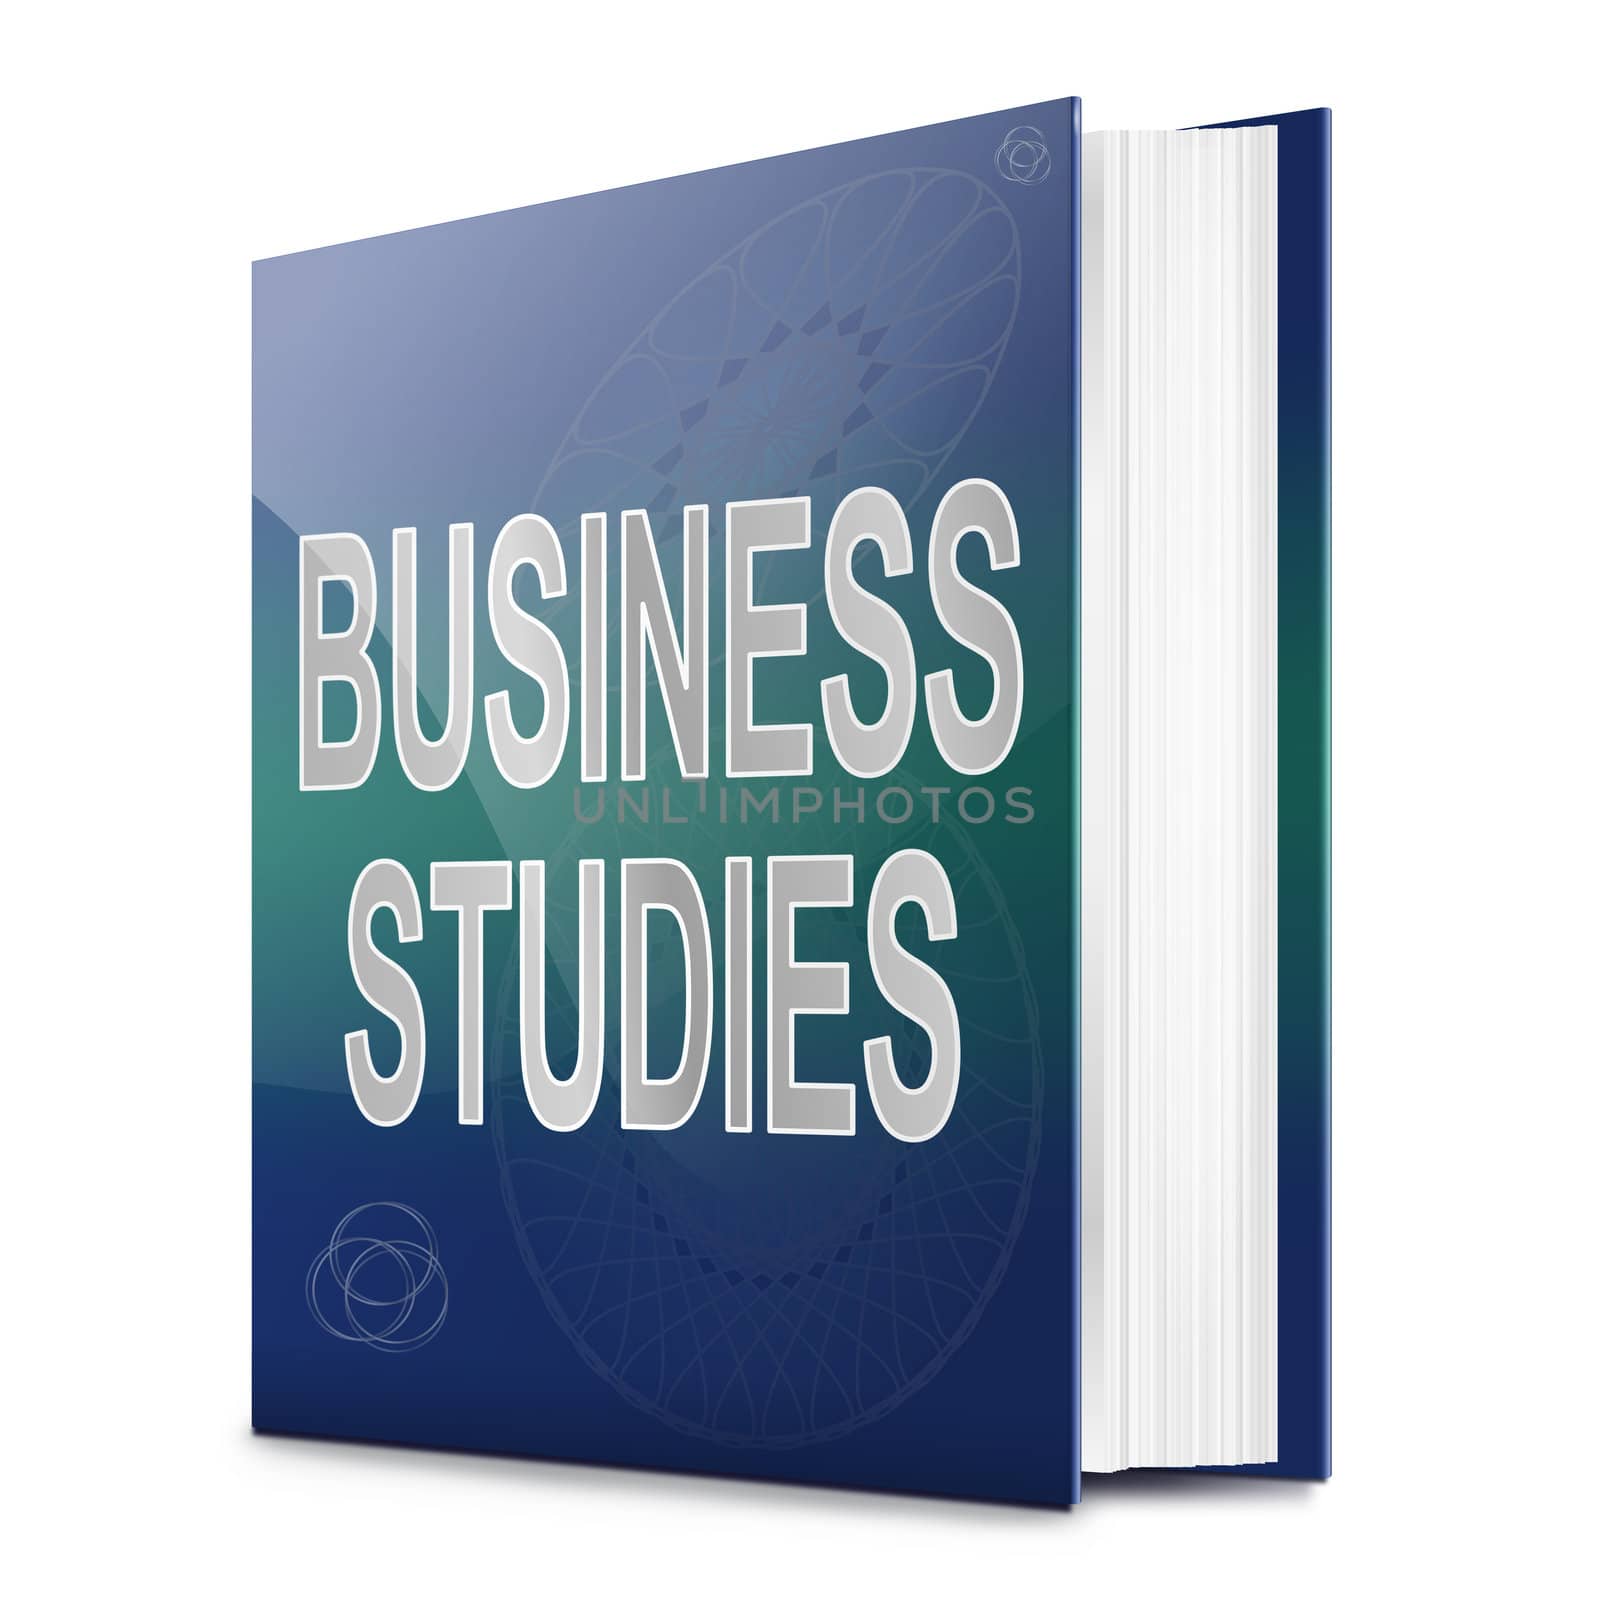 Business studies concept. by 72soul